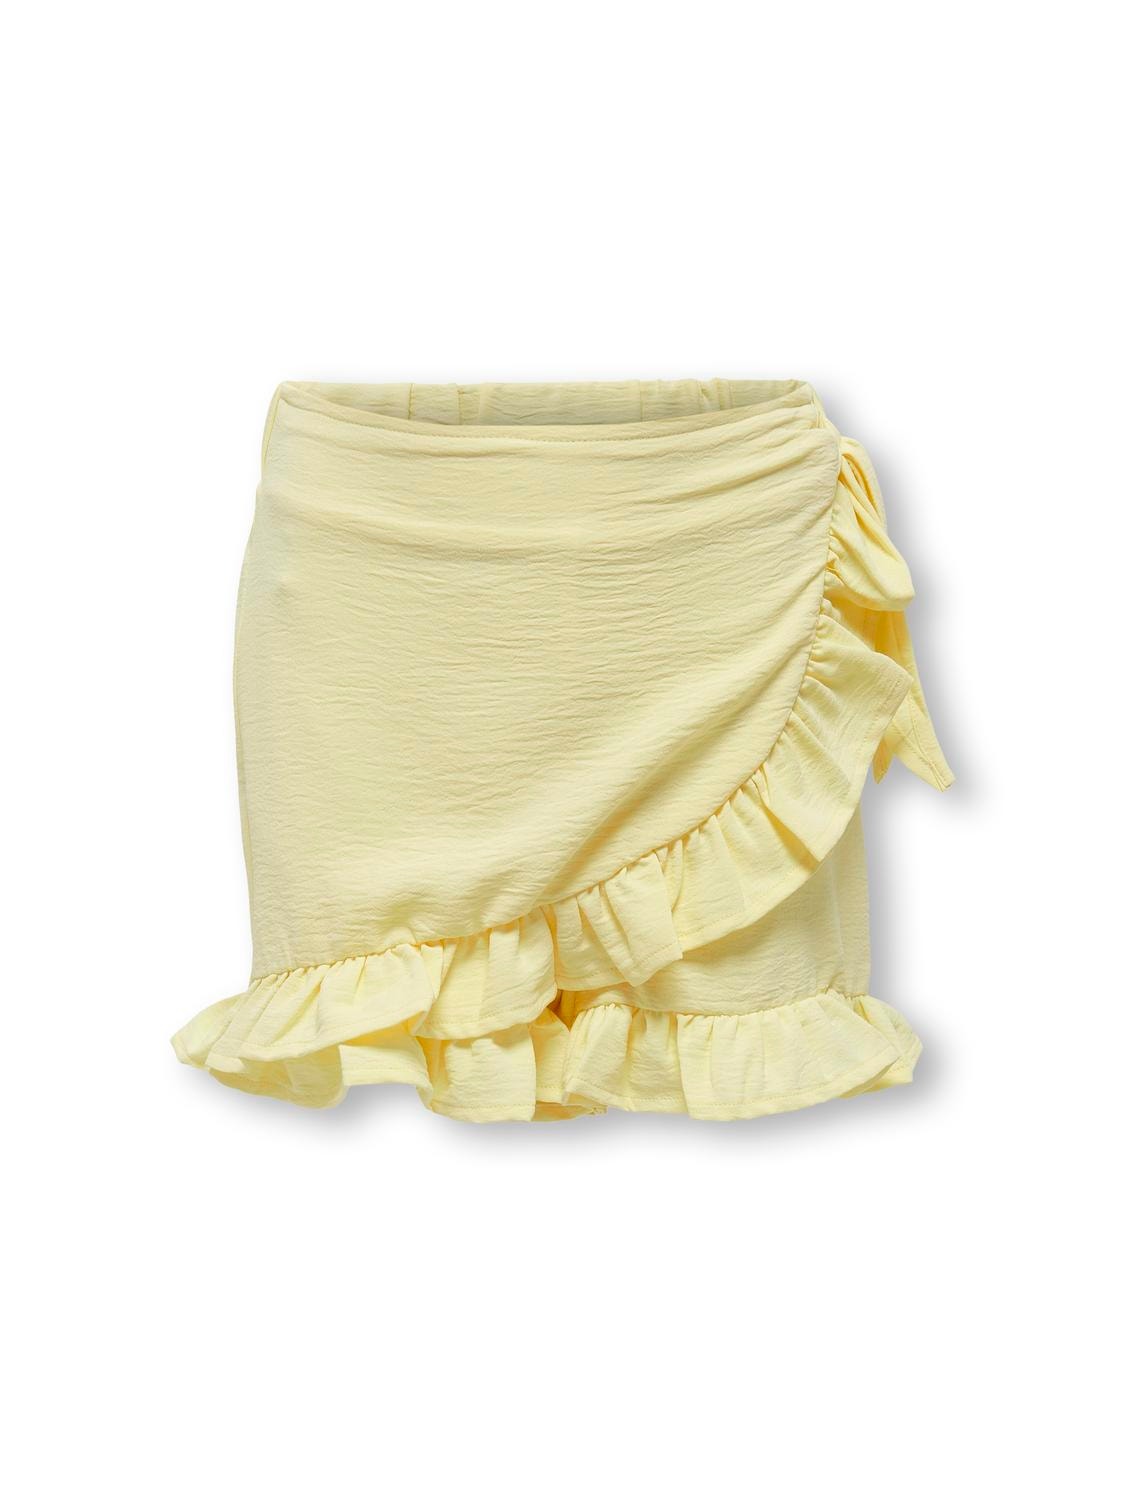 ONLY Normal geschnitten Shorts -French Vanilla - 15260982